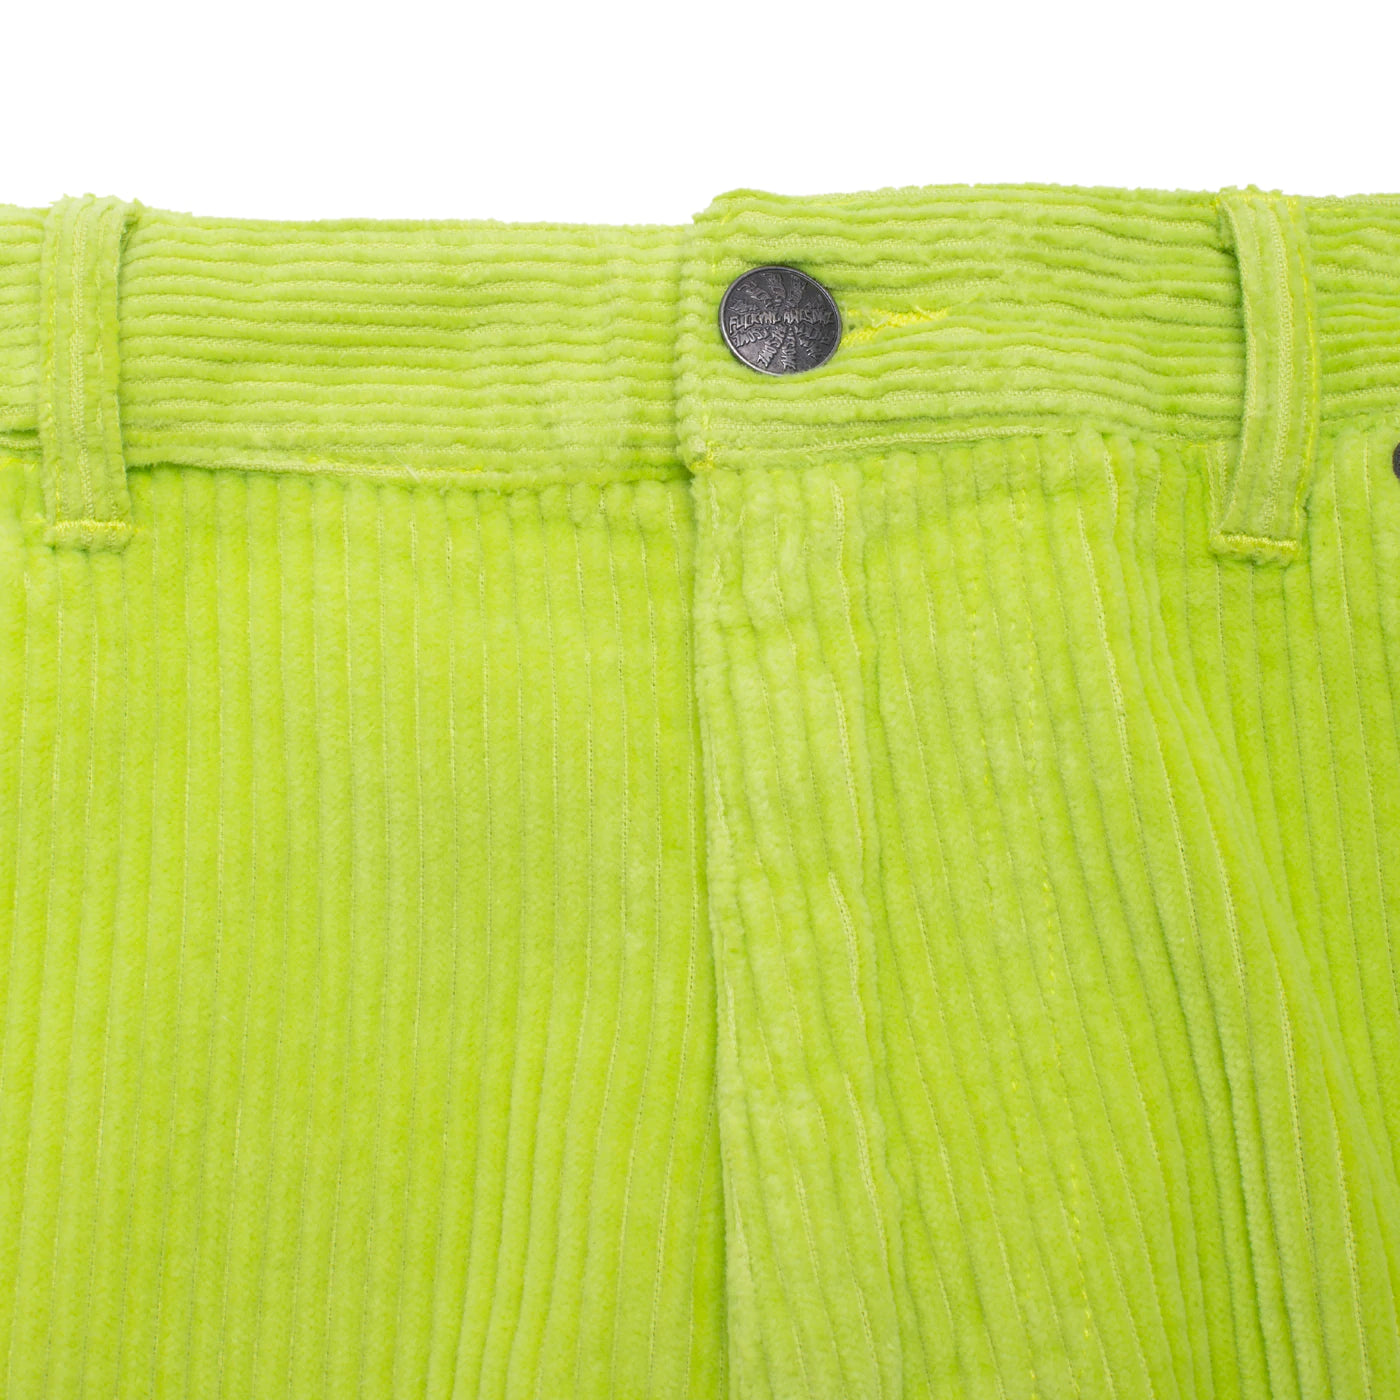 FA Corduroy 5 Pocket Pant - Neon Yellow